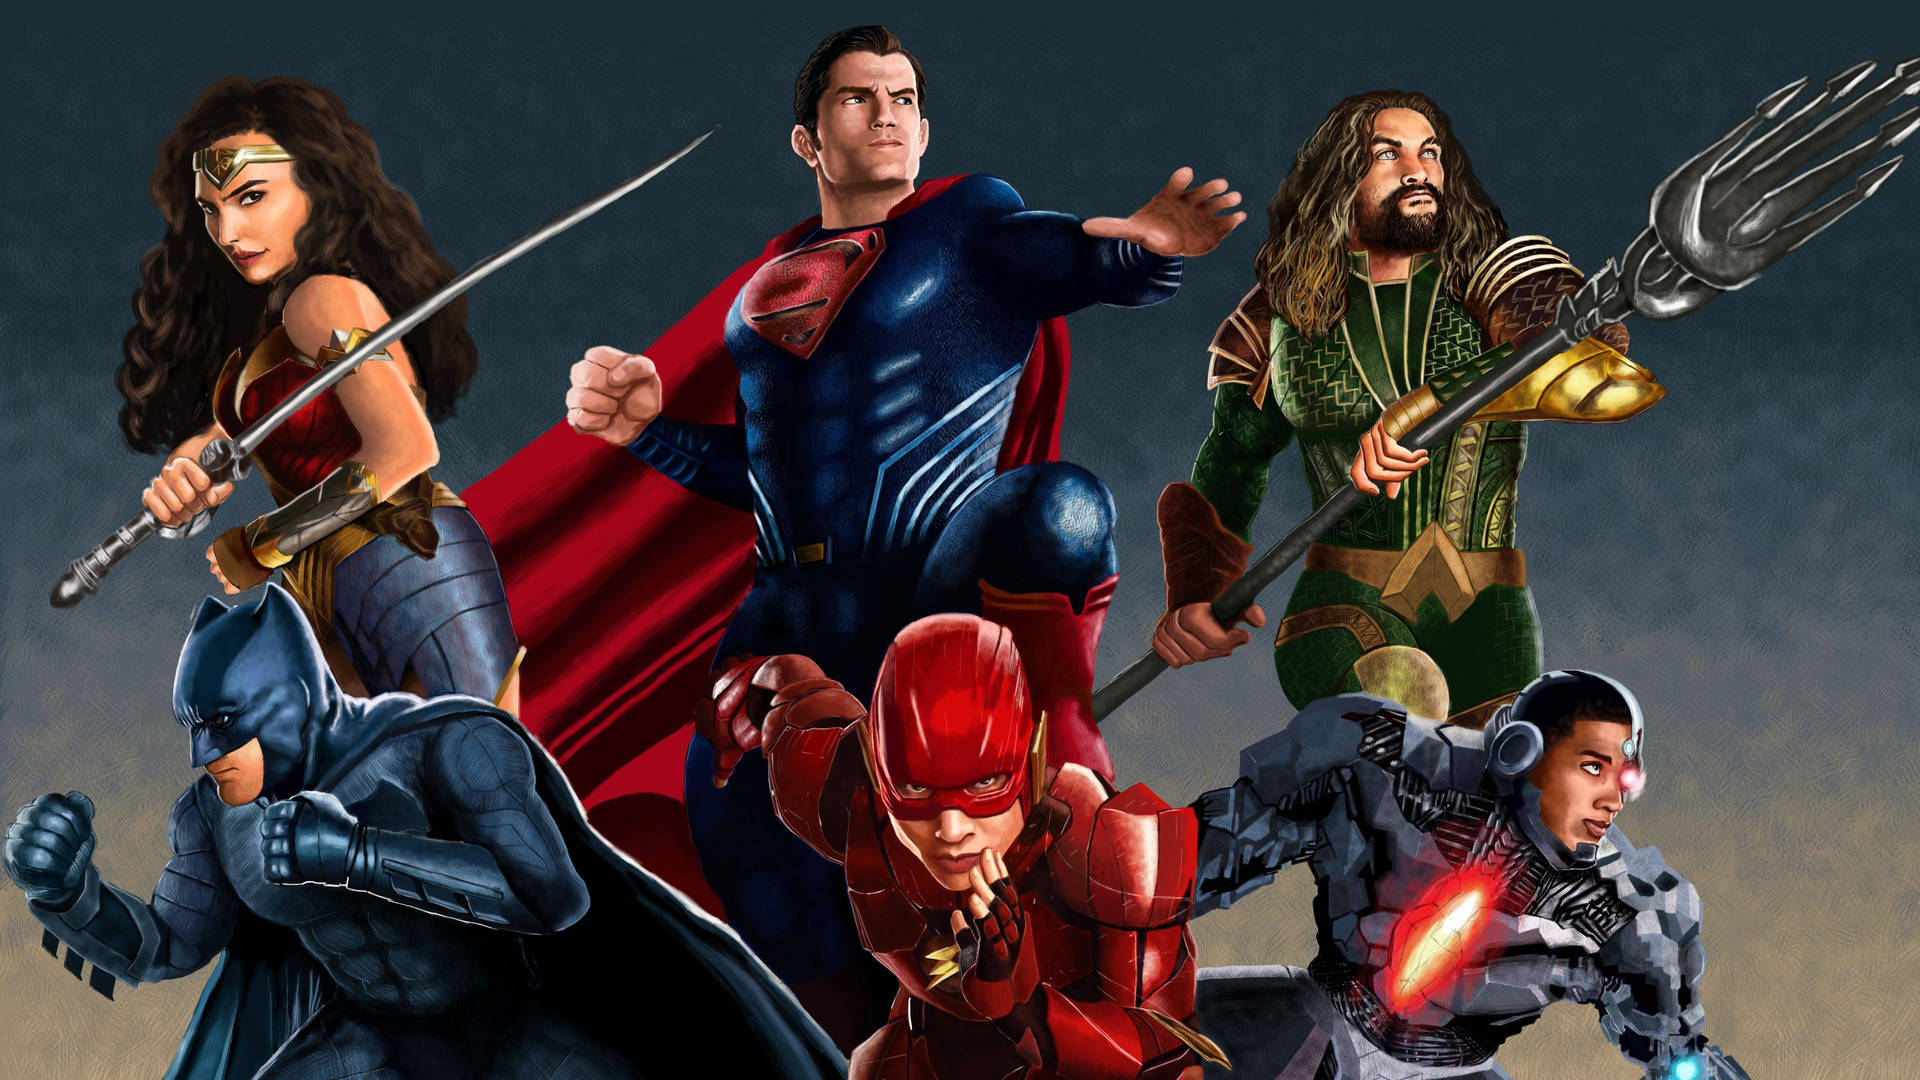 Illustrated Art Justice League Cast